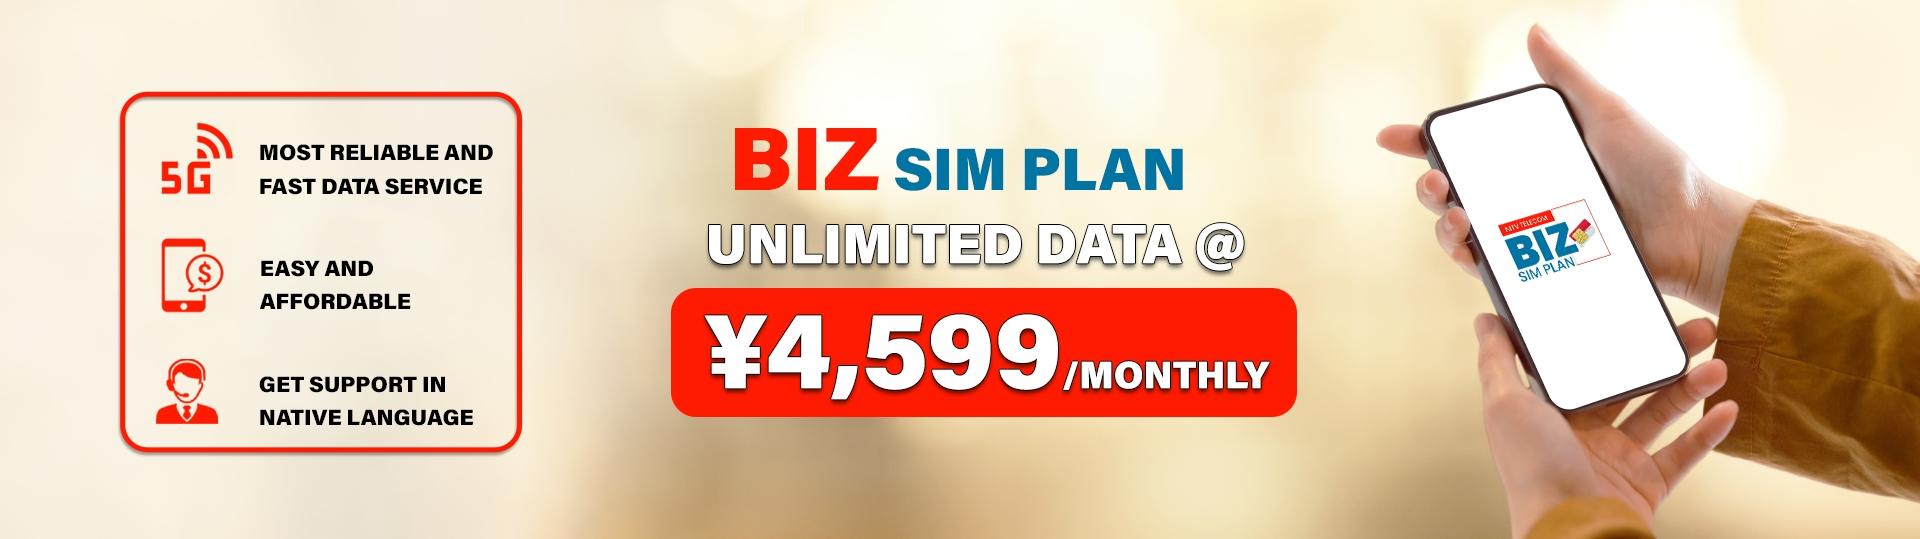 BIZ SIM Plan Unlimited Data and Voice